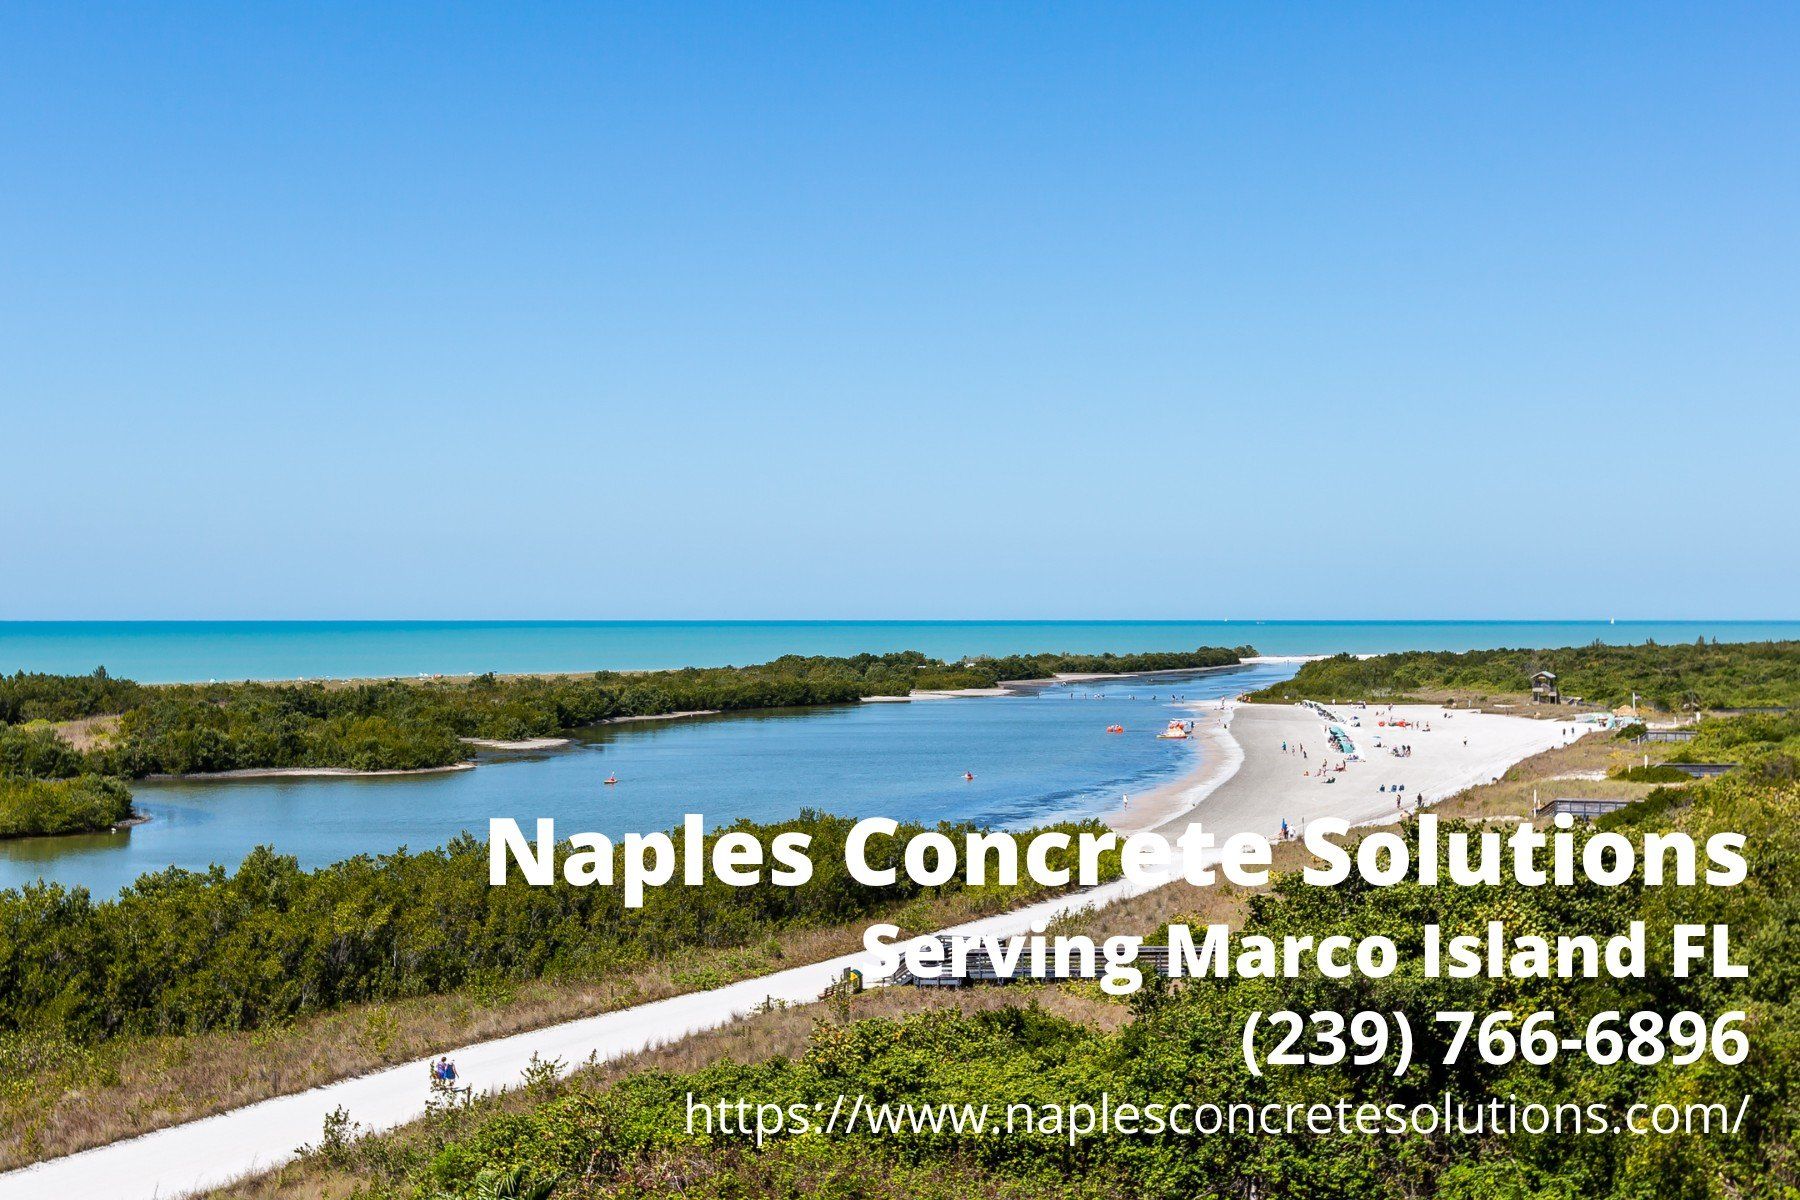 contact info of Naples Concrete Solutions - a decorative concrete company serving Marco Island, FL